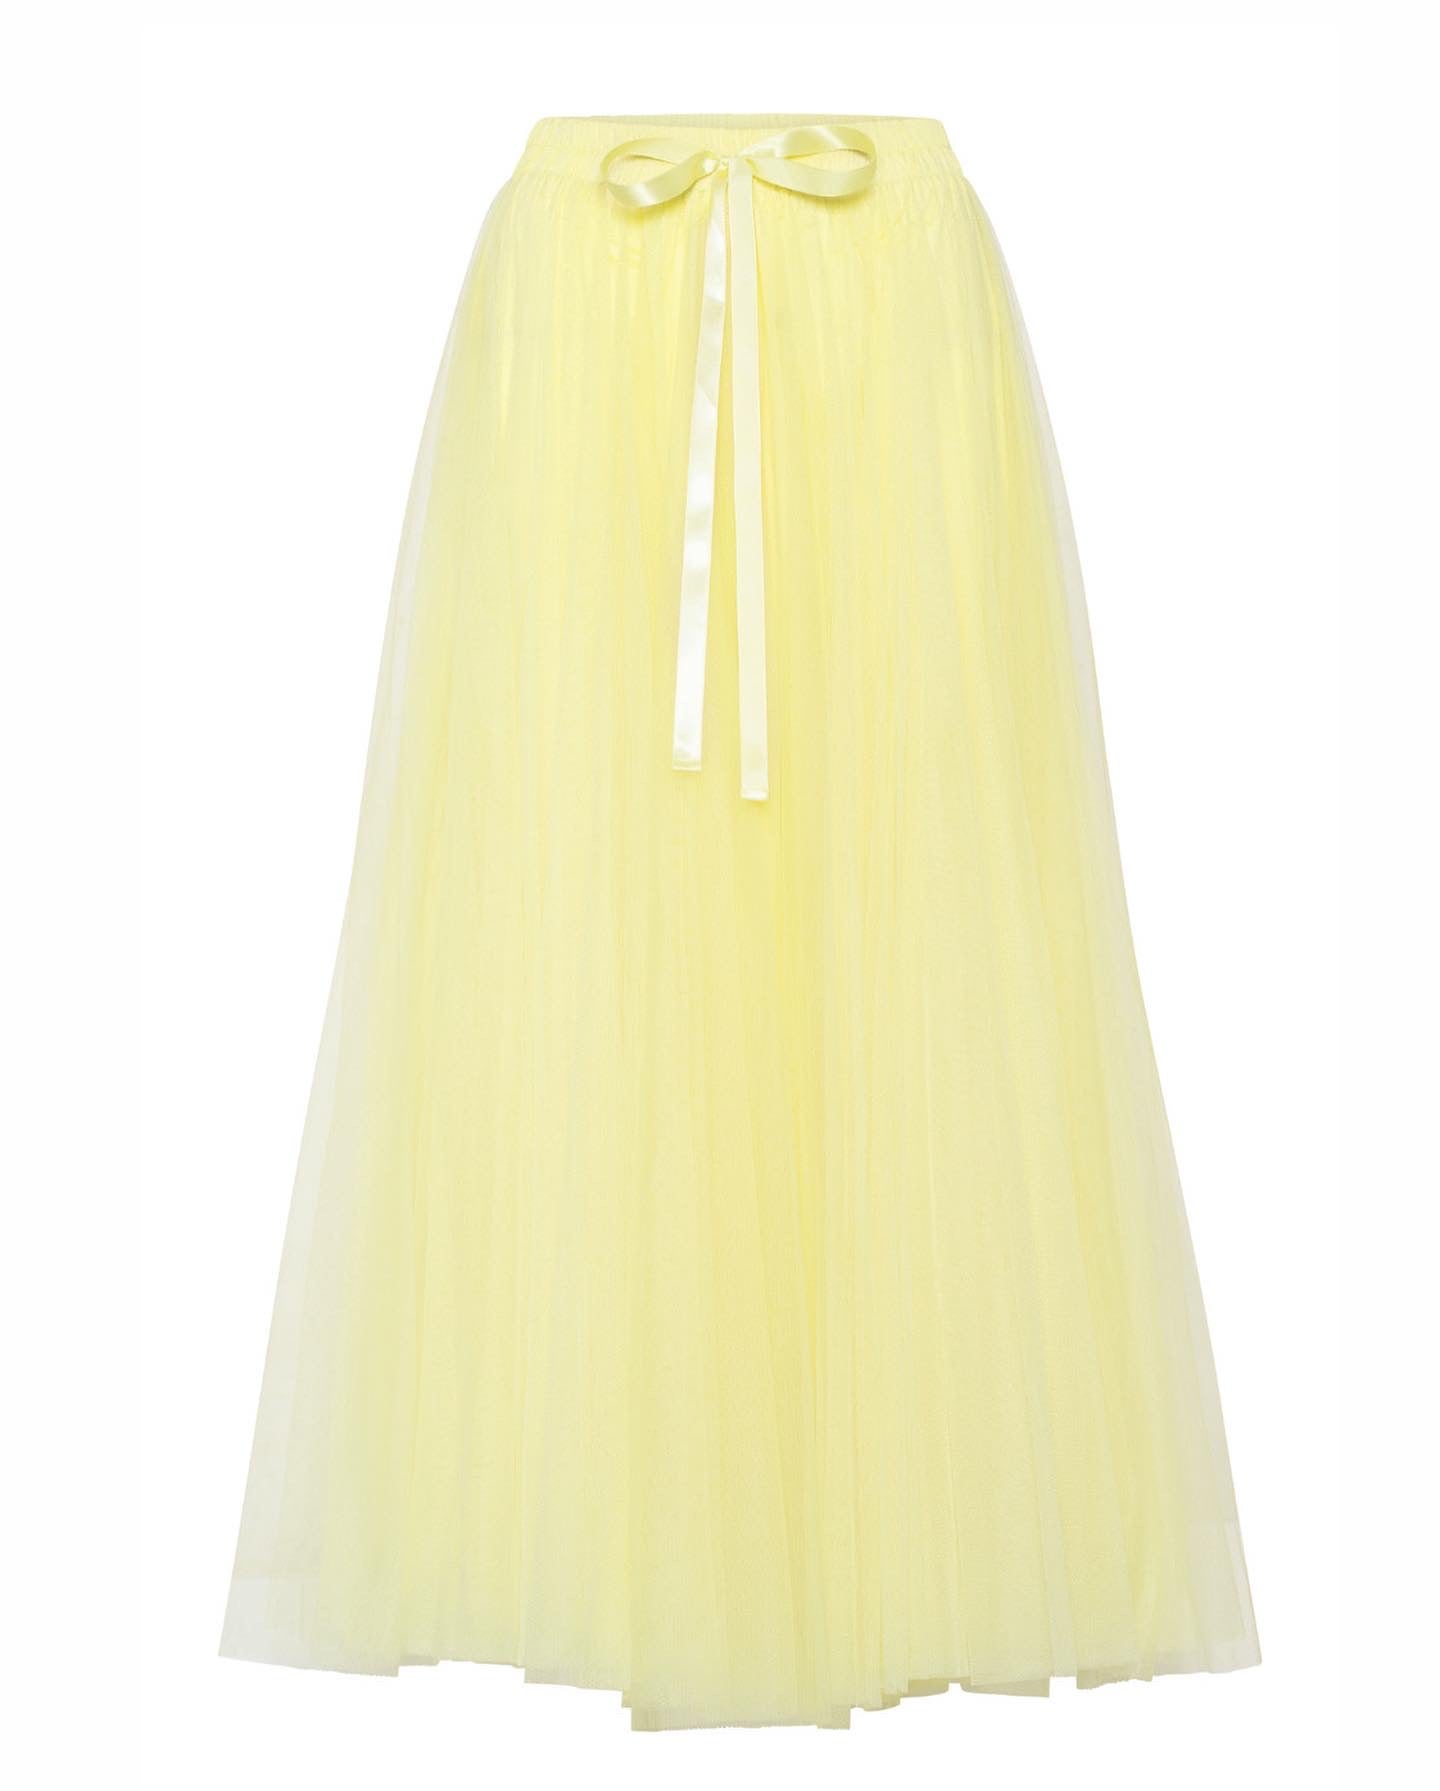 Daisy tyl skirt - yellow